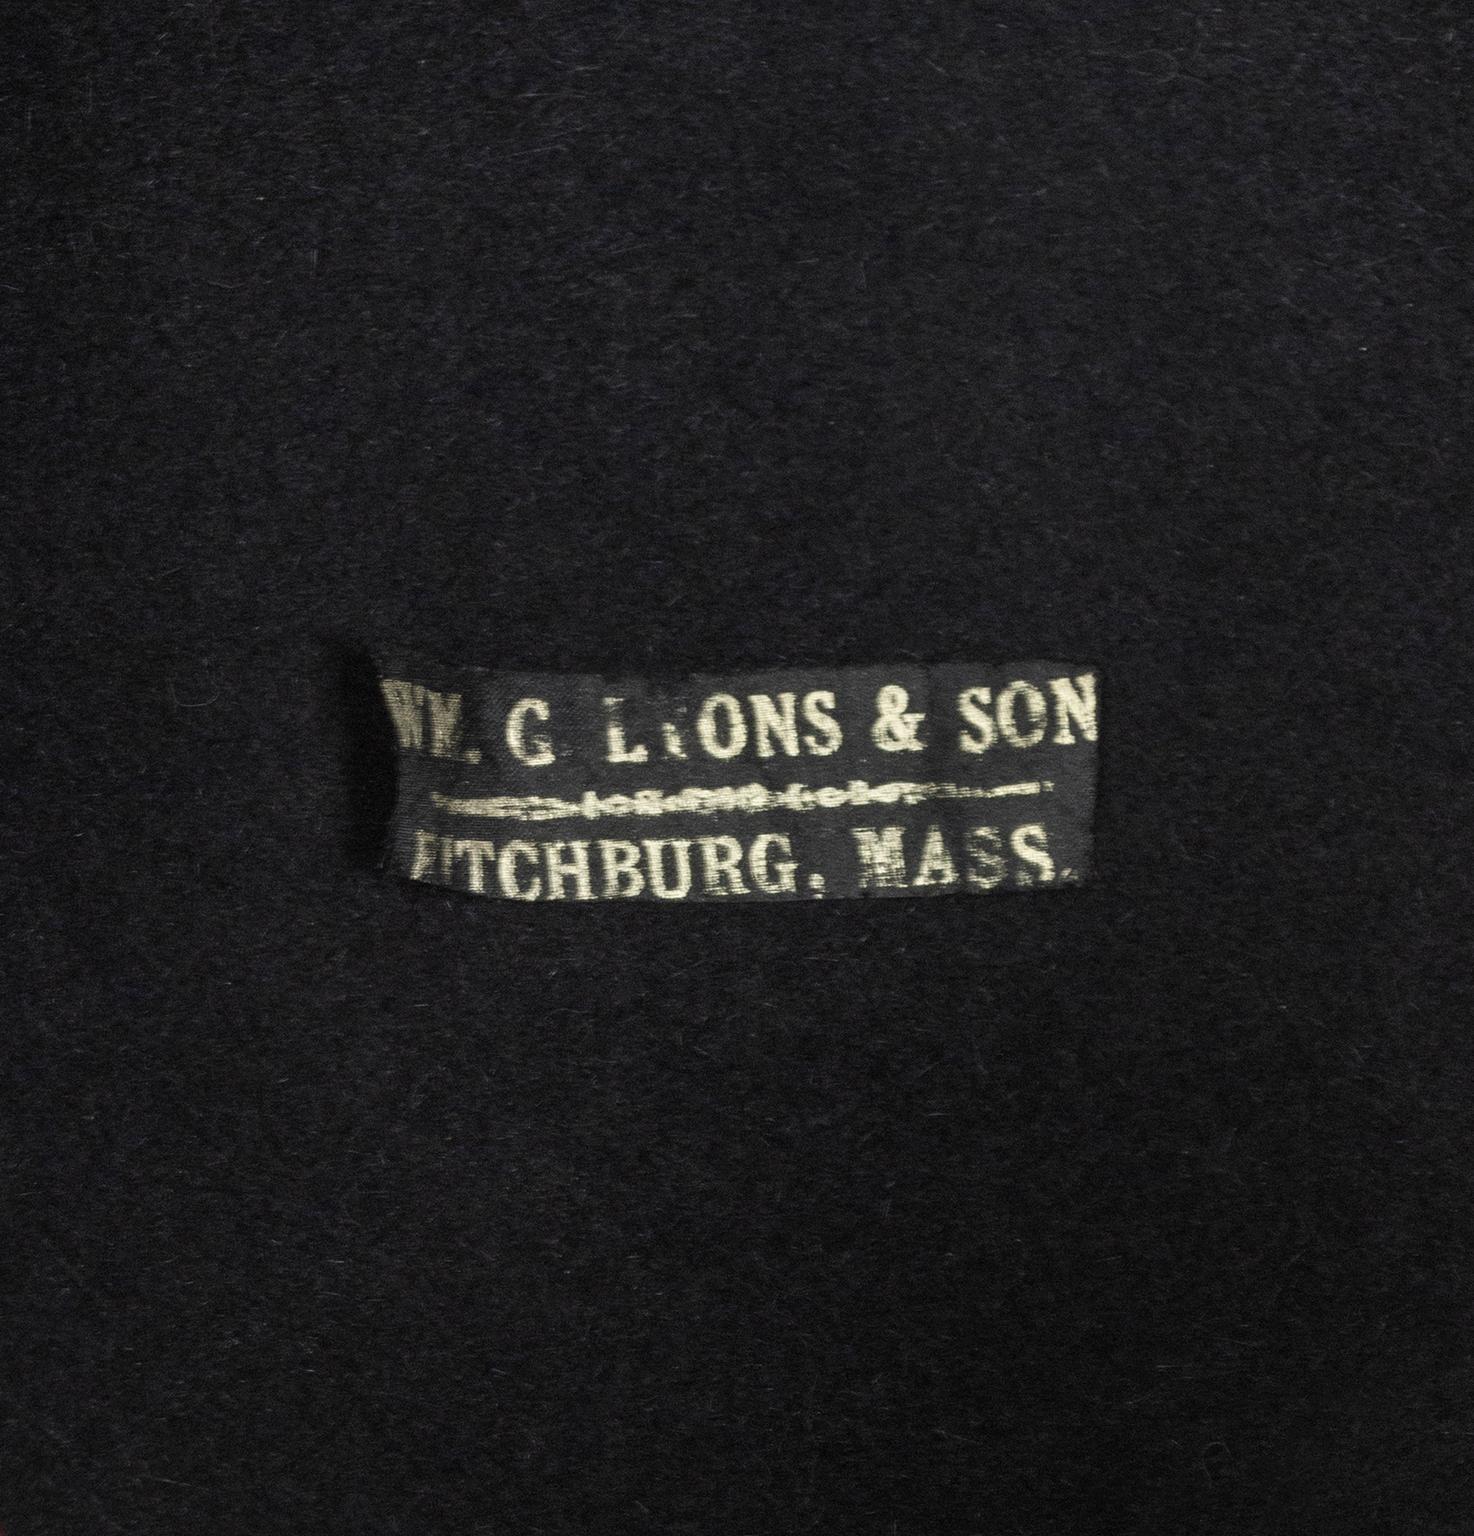 Men's Men’s William Lyons Black Fine Felt Bowler Hat – size 7 1/8, 1920s For Sale